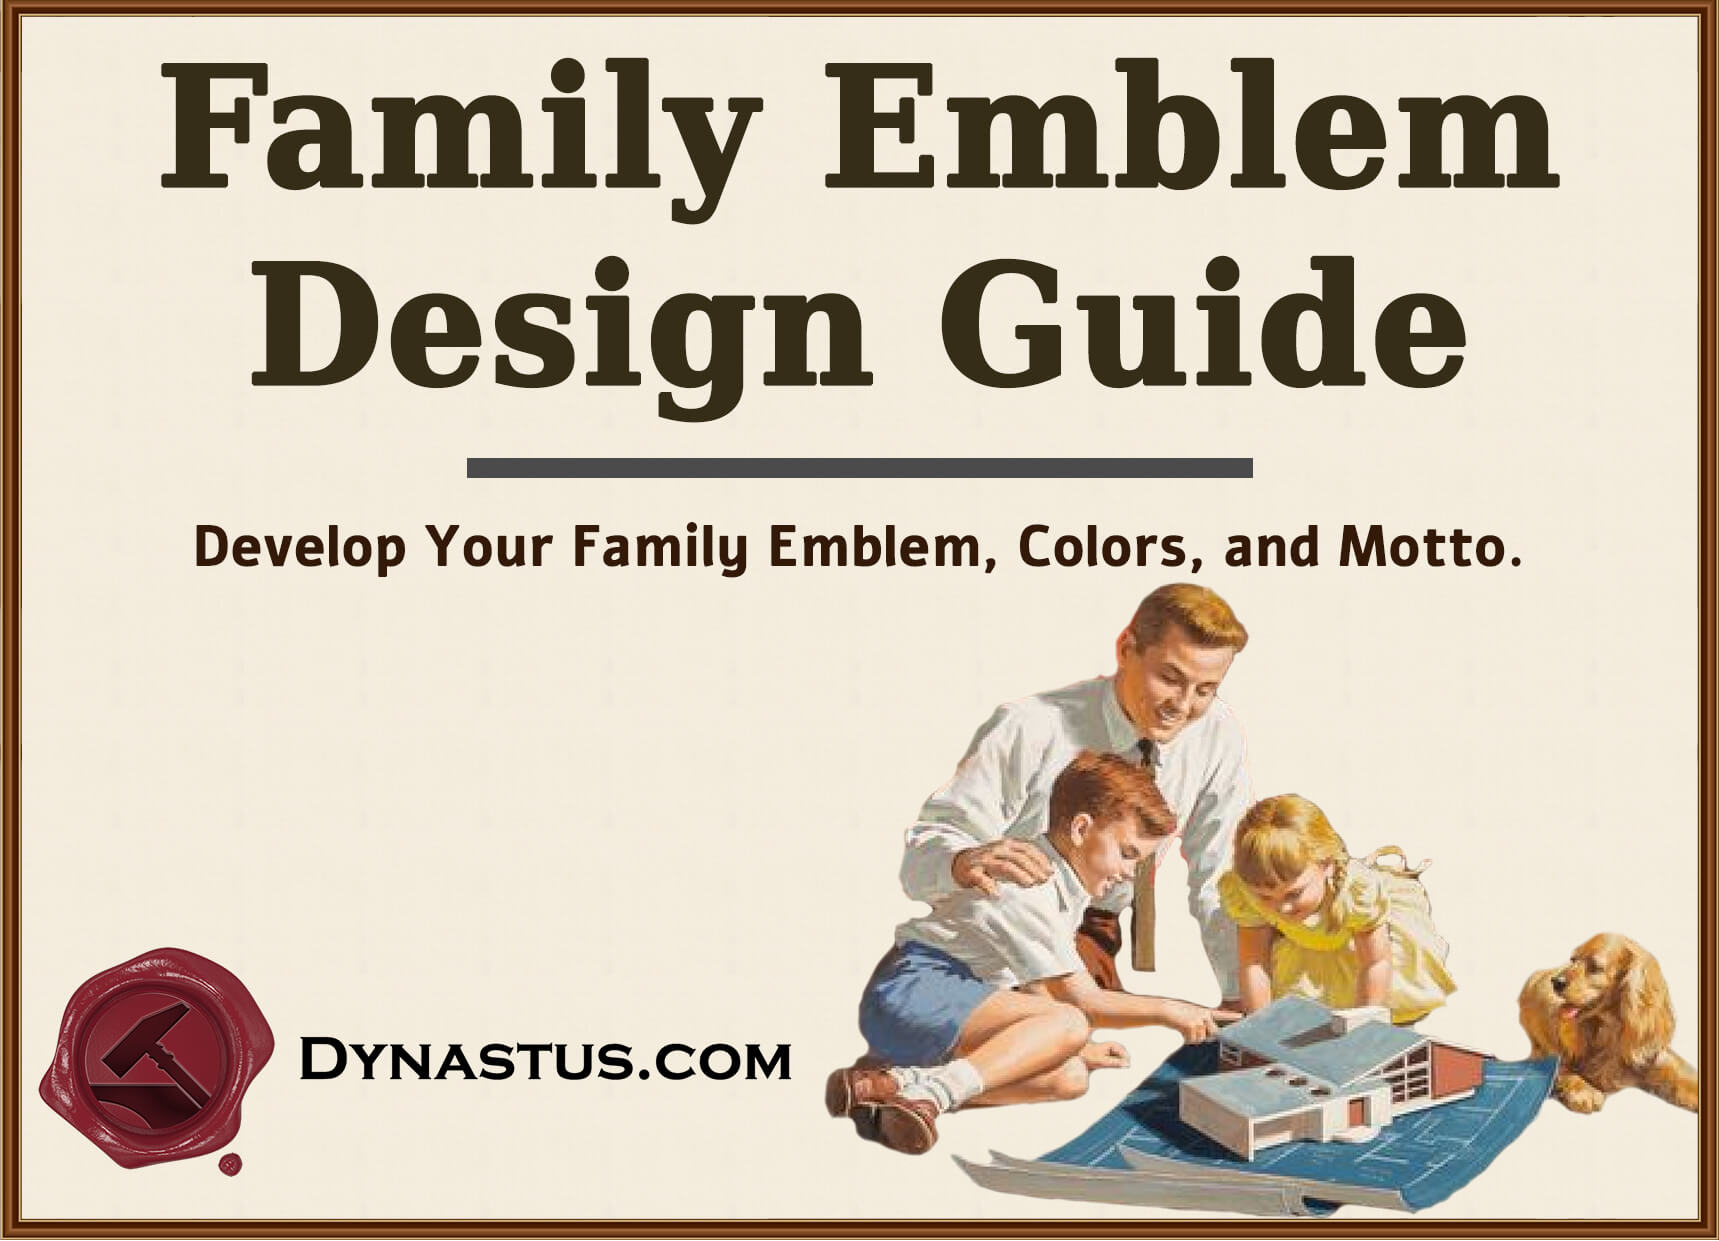 Dynastus Emblem Design Guide Logo